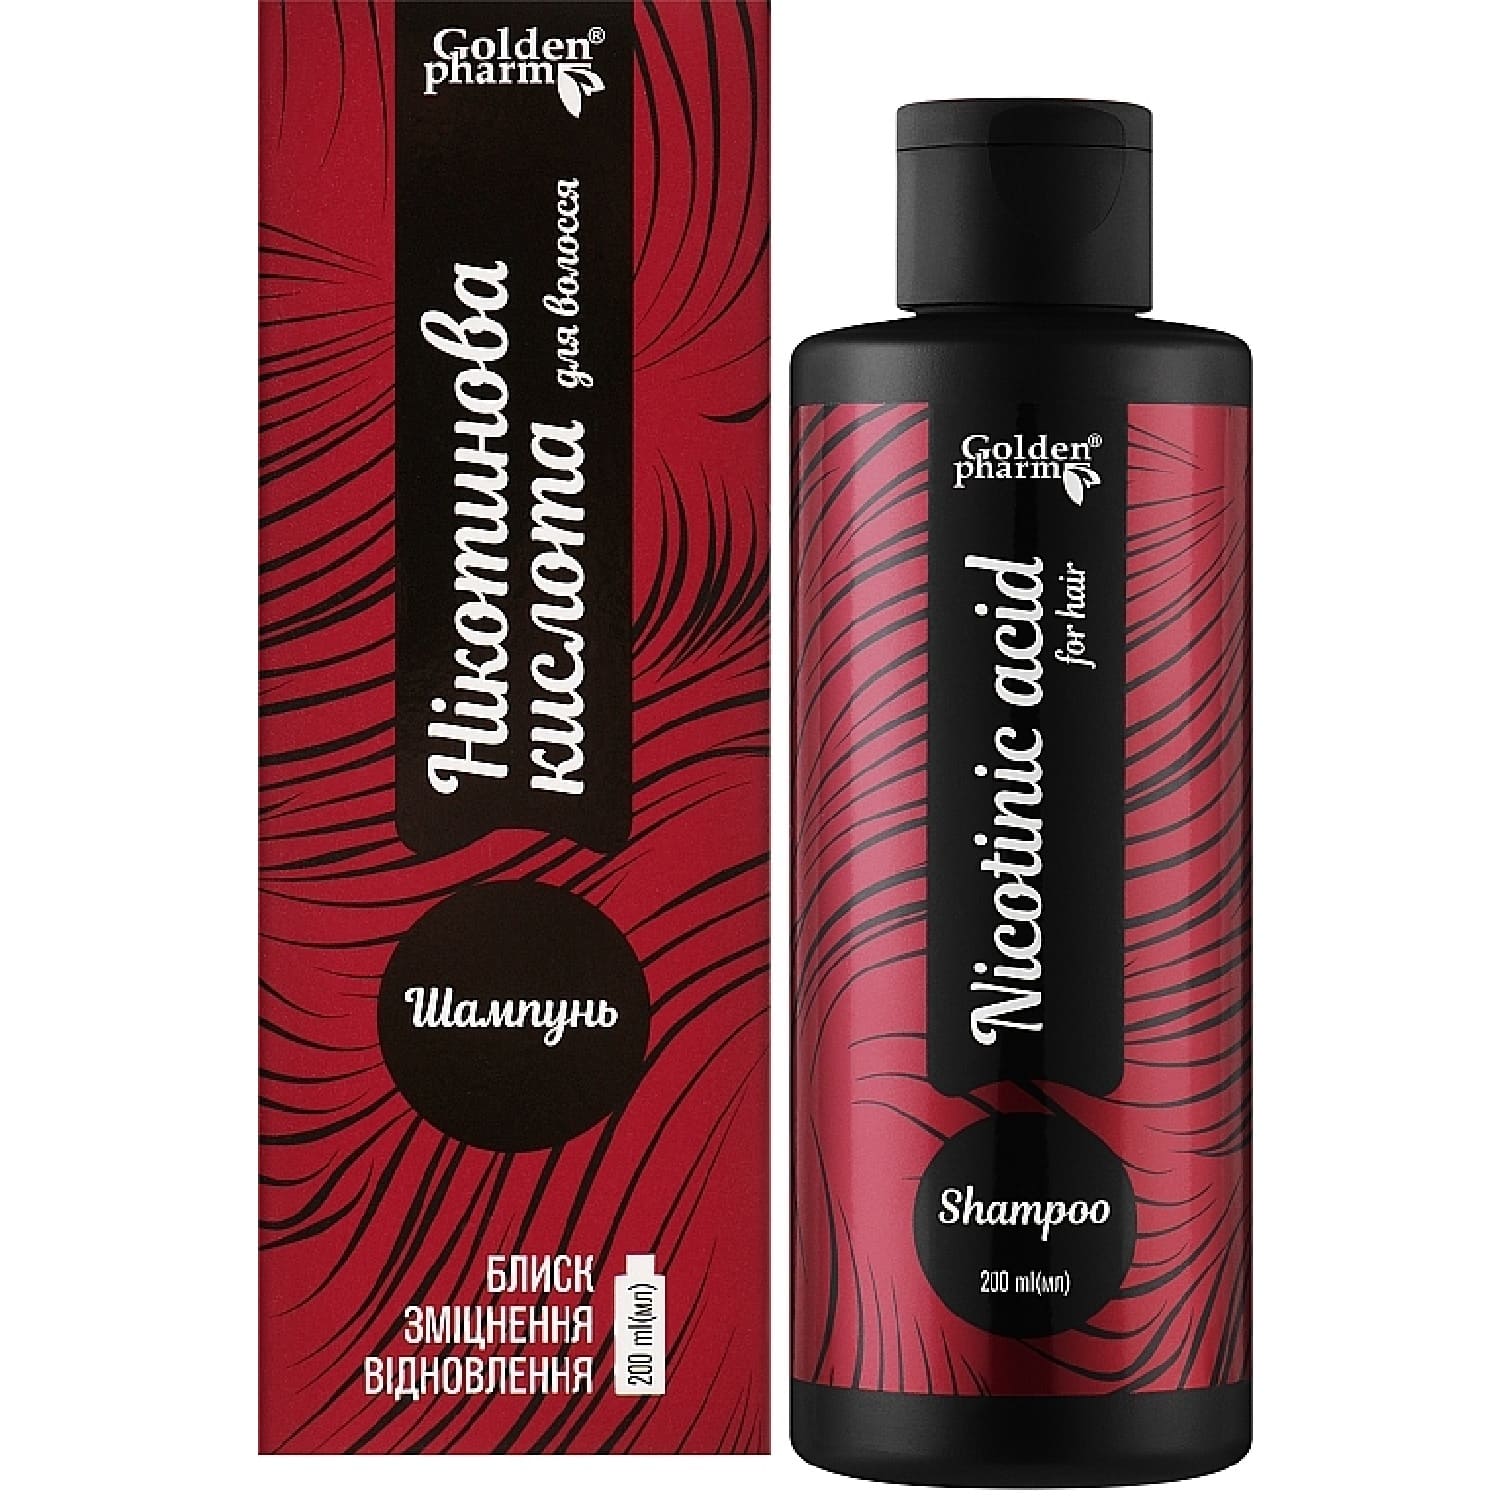 Hair shampoo with Nicotinic acid